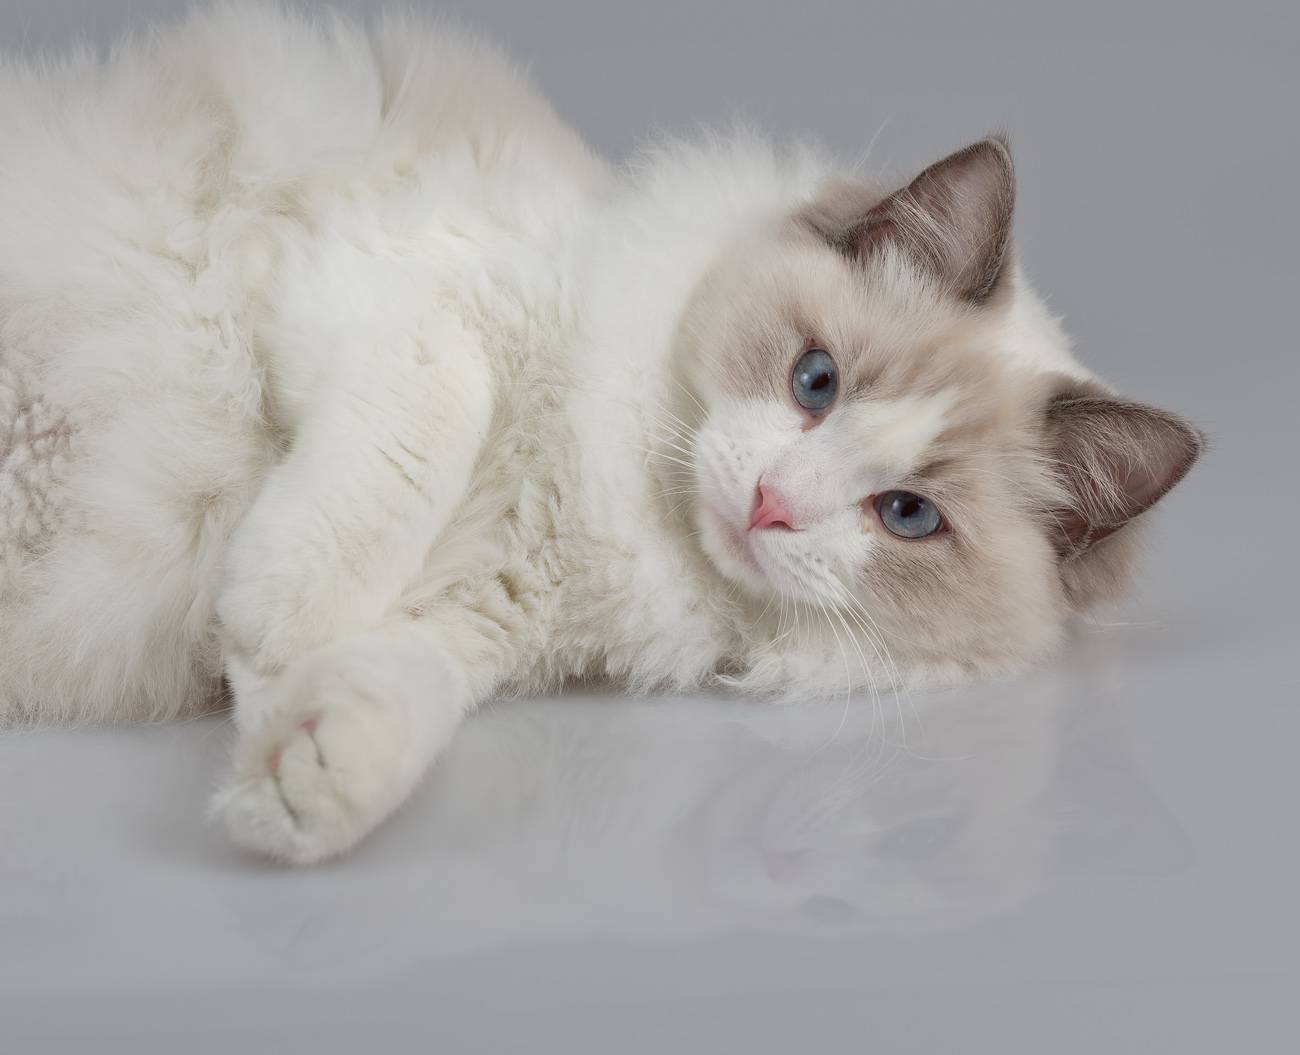 Кошка рэгдолл: описание породы, характер, фото, цена котенка